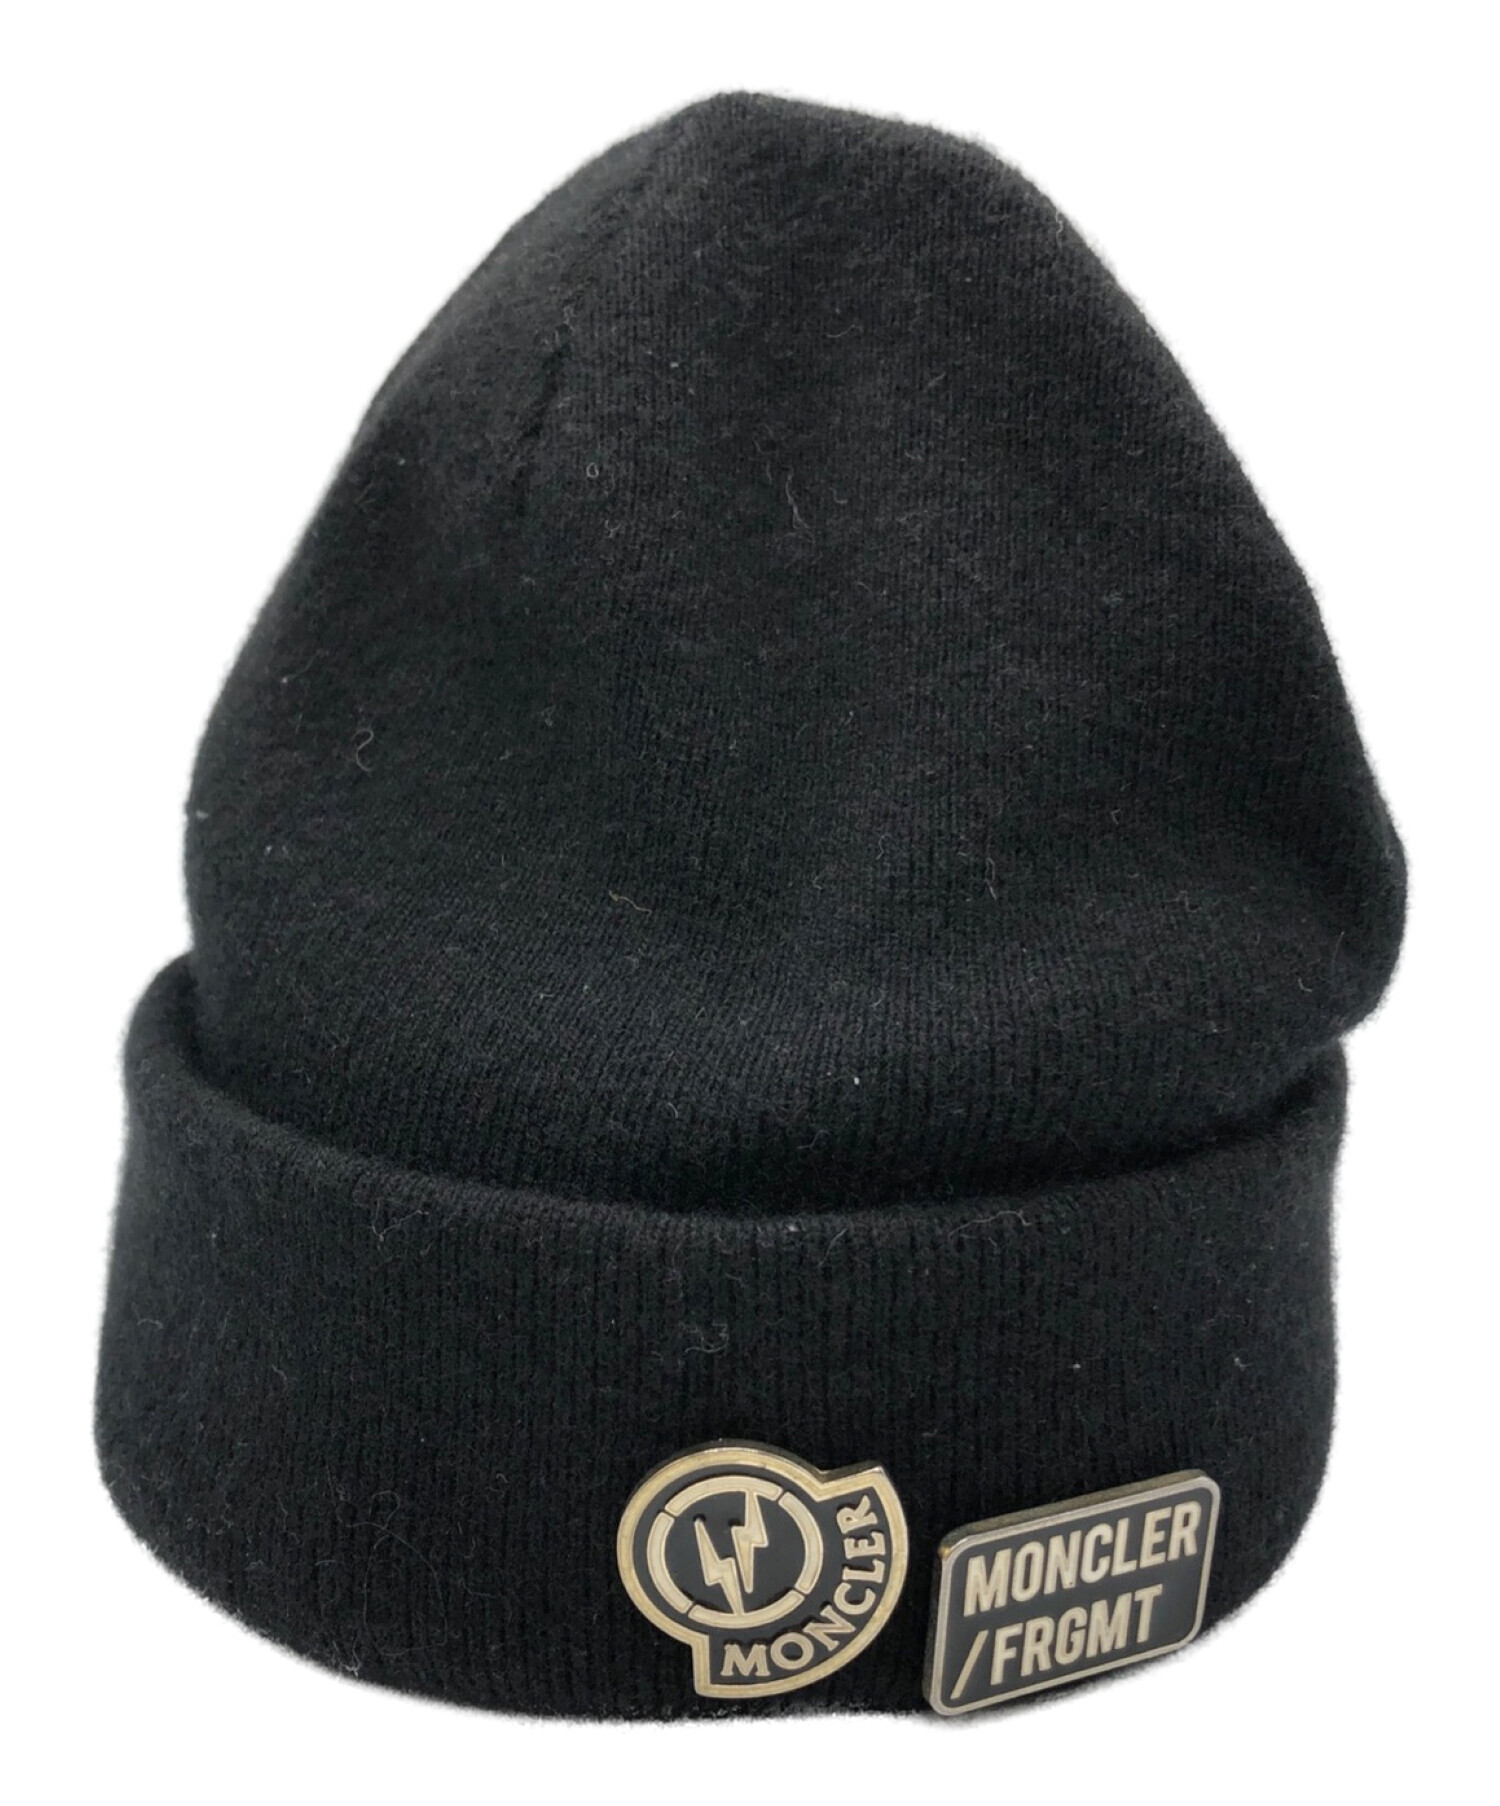 MONCLER FRAGMENT ビーニー モンクレール フラグメント ニット帽ブラック